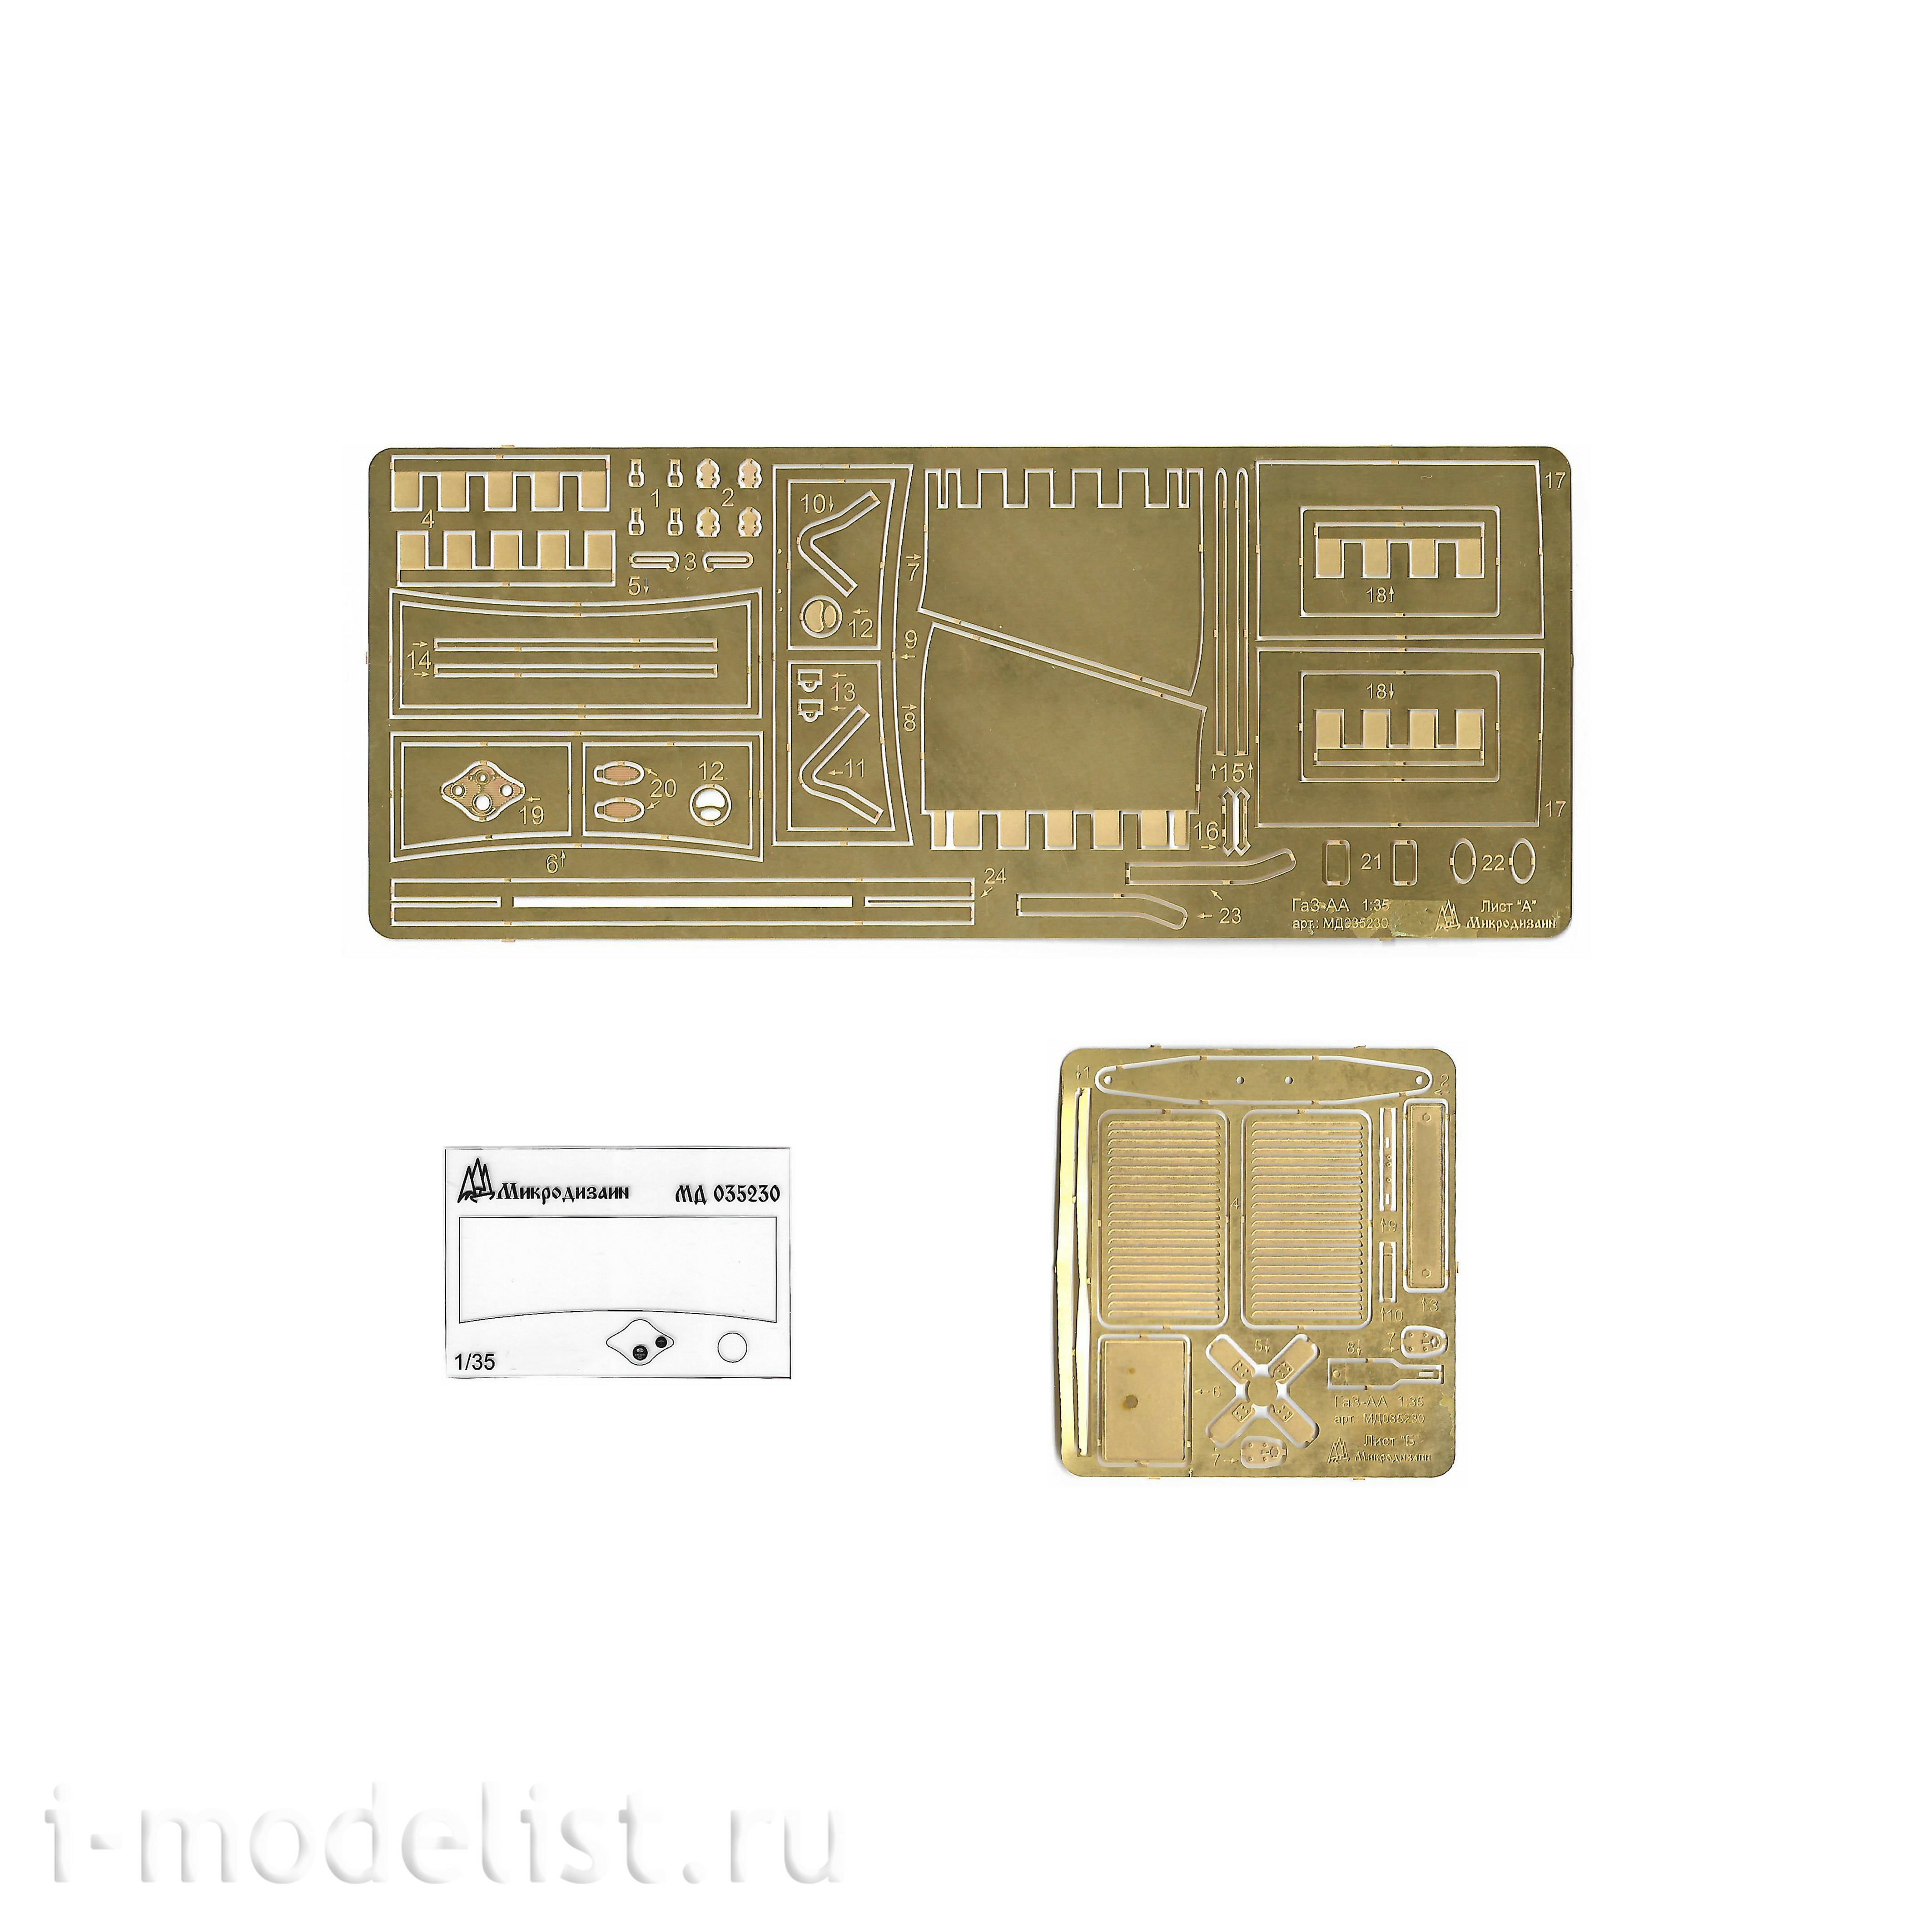 035230 Microdesign 1/35 AA, -AAA, -MM universal mini Art set (1:35)